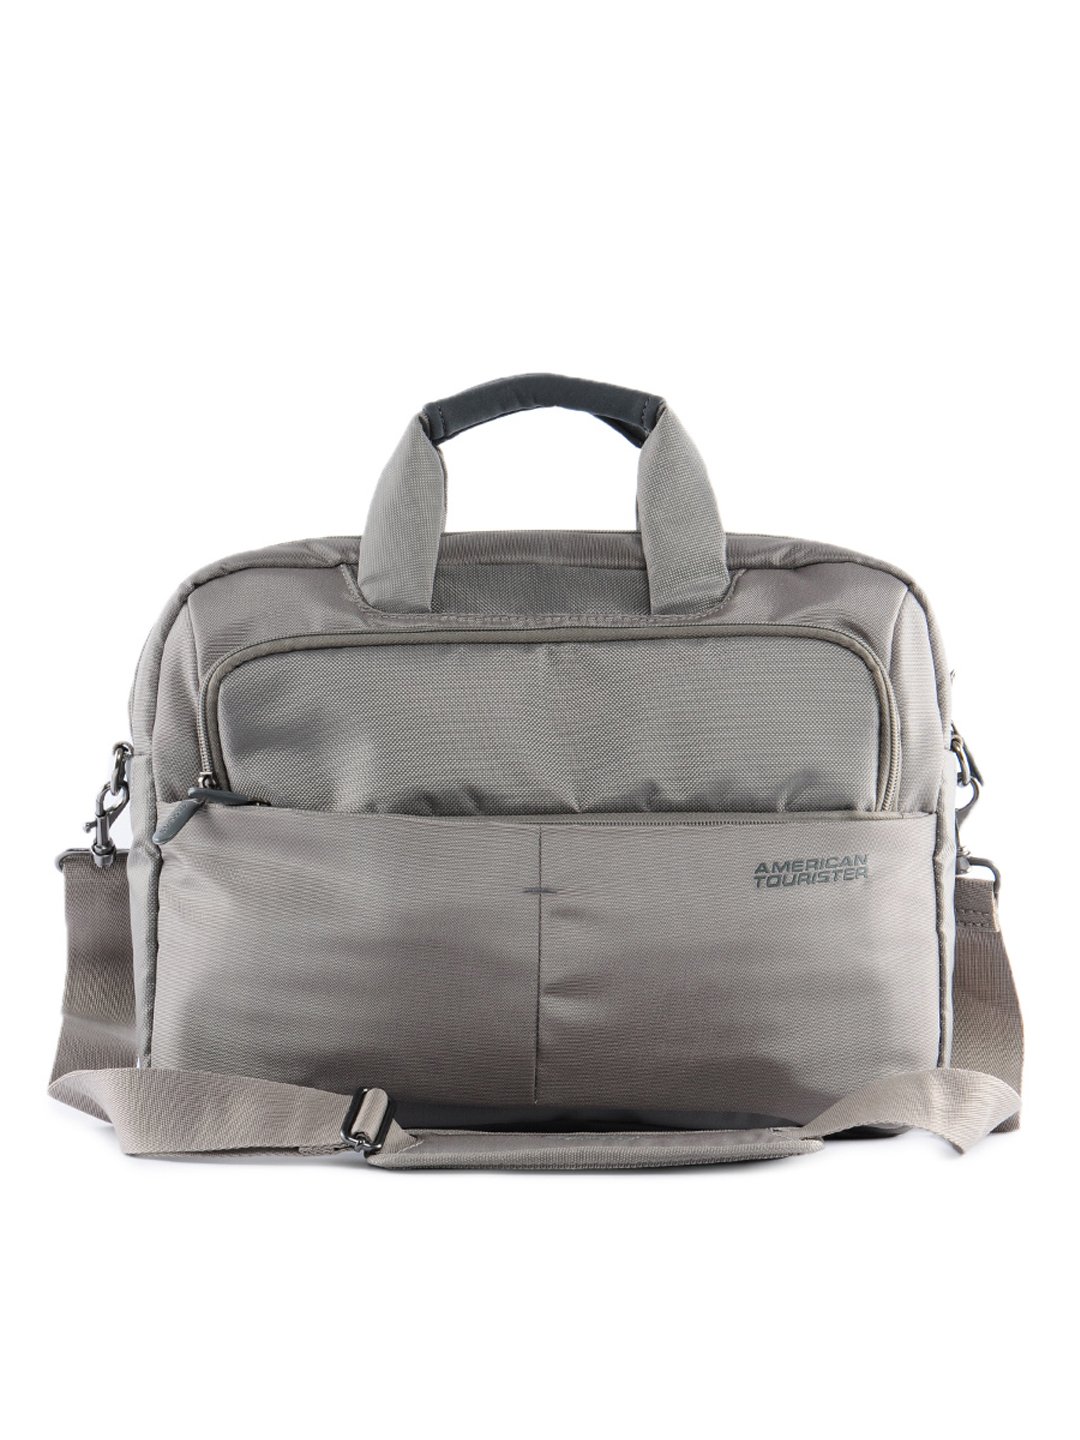 American Tourister Unisex Speedair Grey Laptop Bag